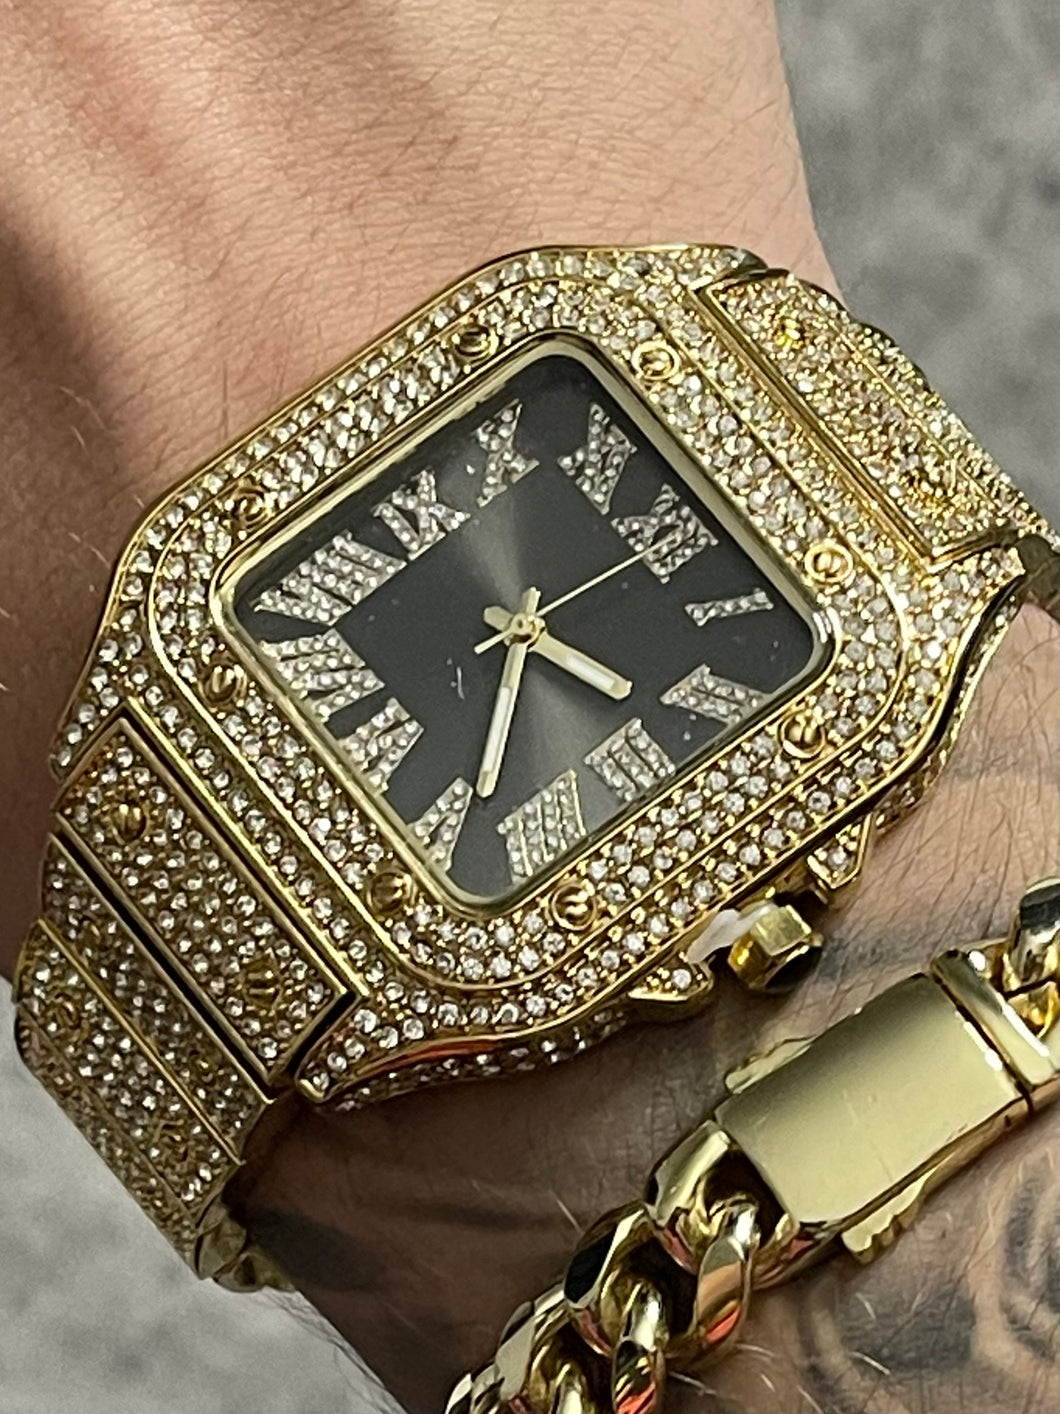 Square cartier type reloj golden & black full ice